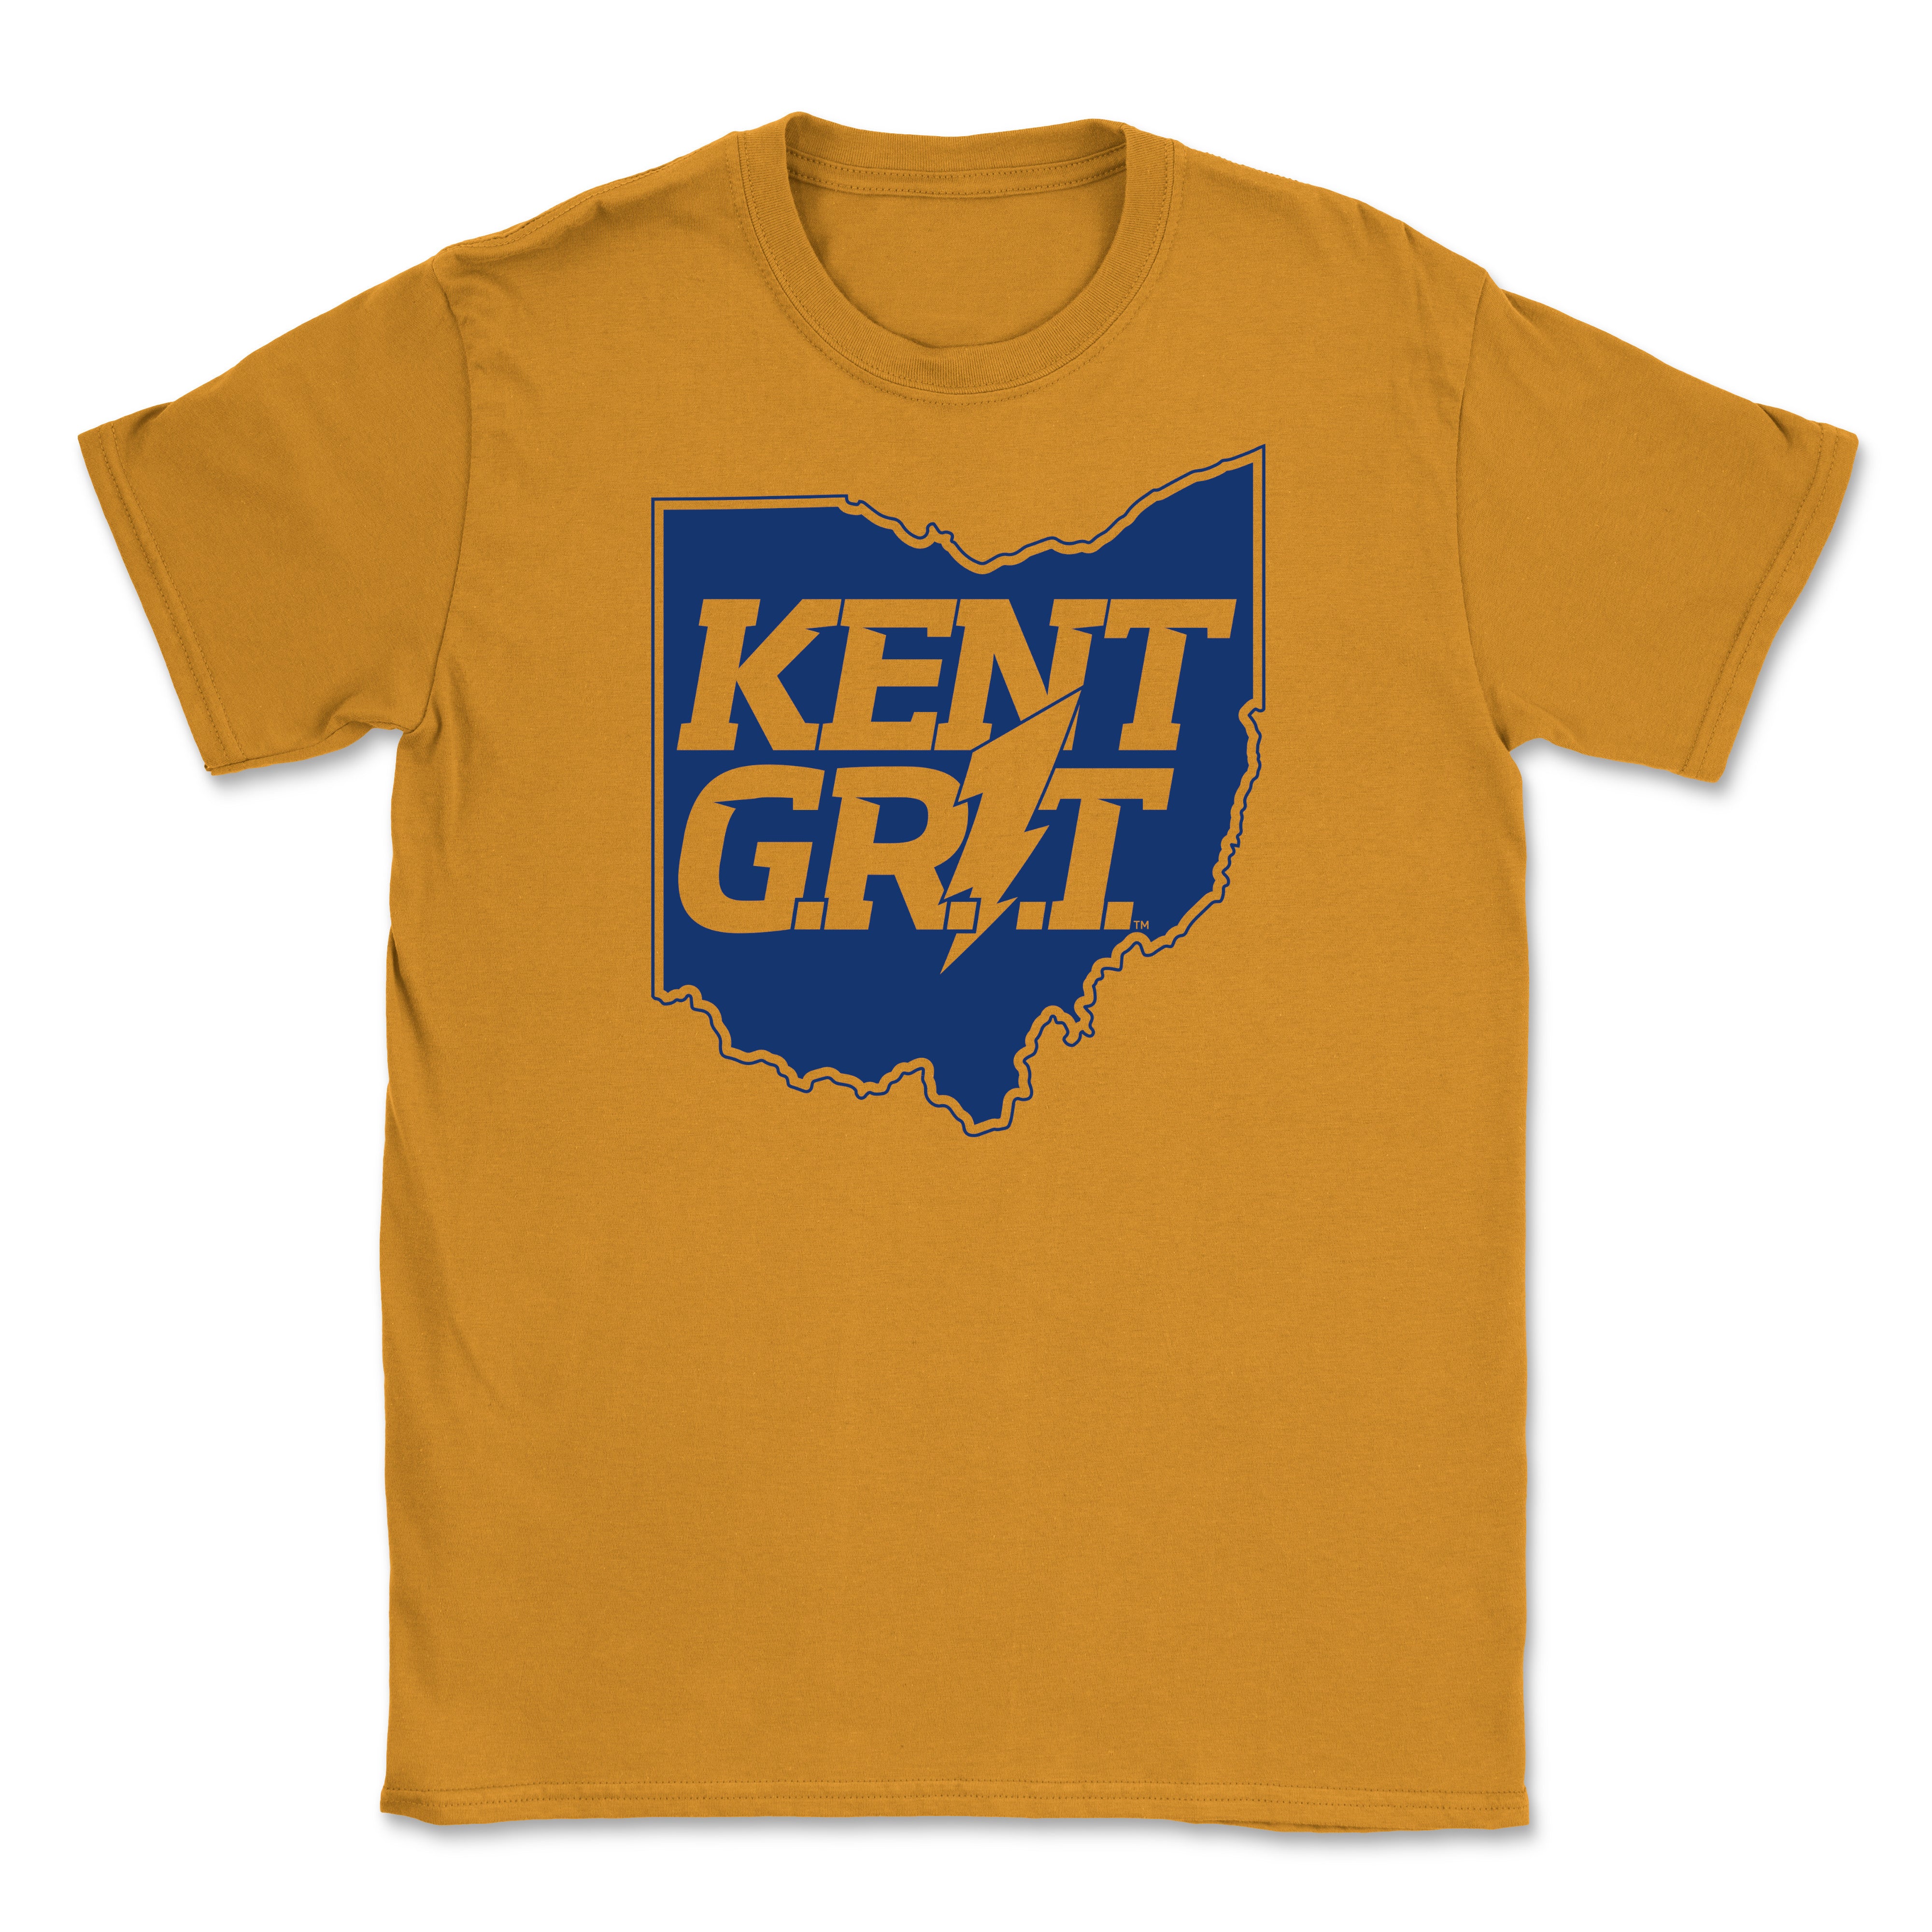 Kent Grit